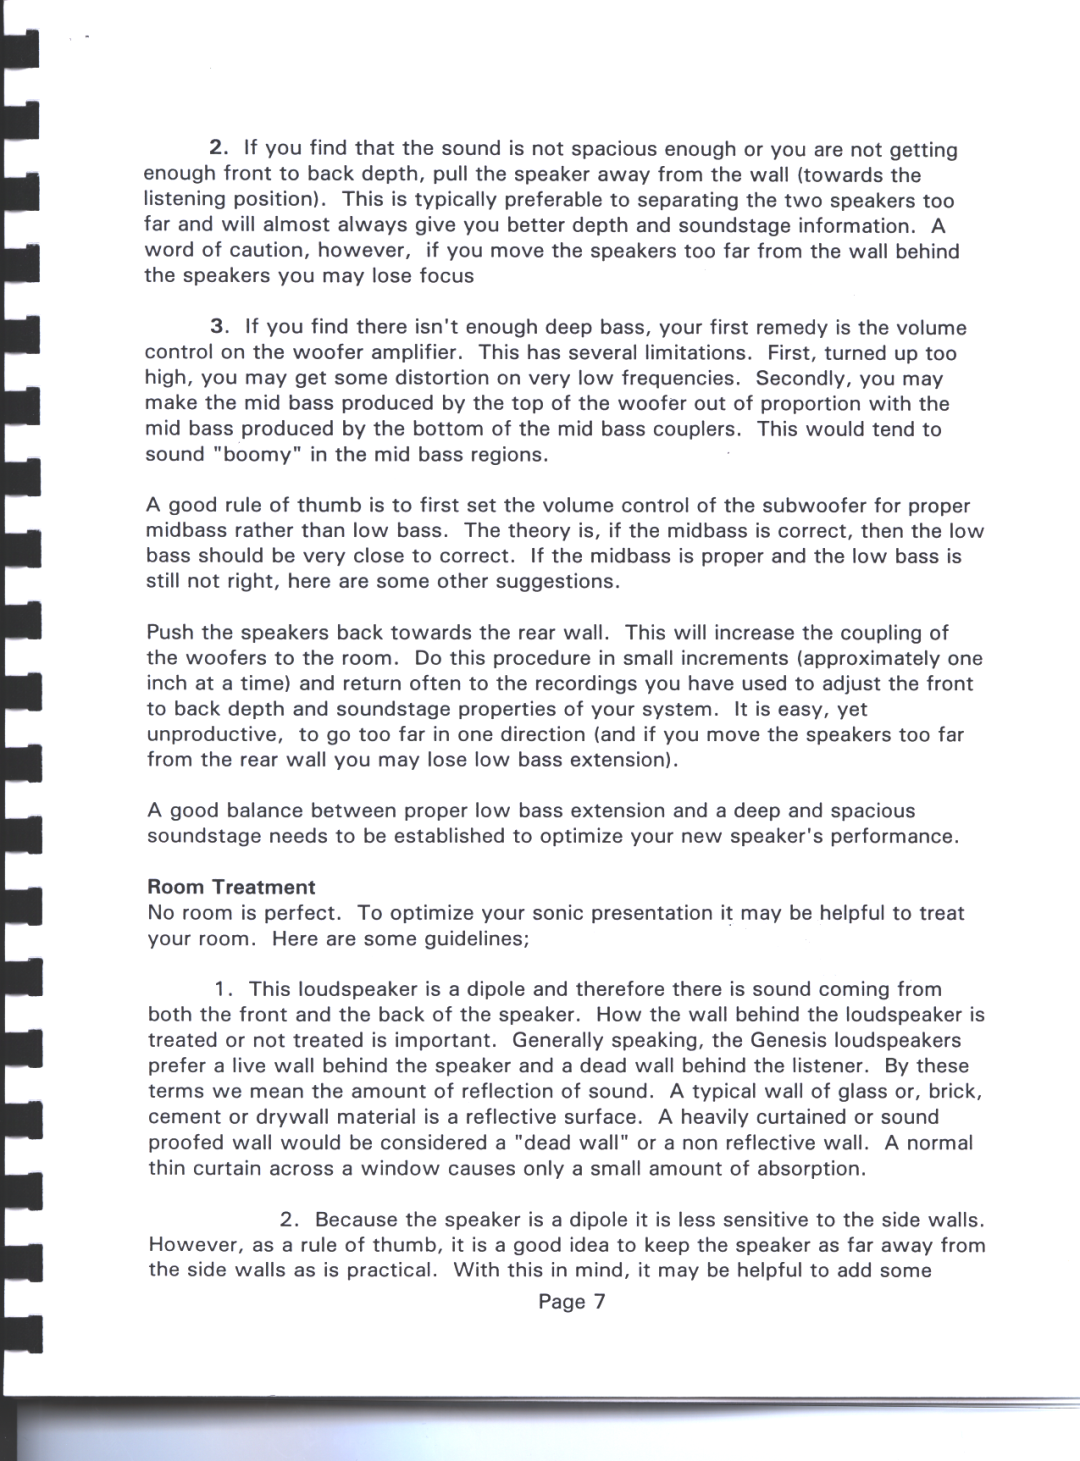 Genesis Advanced Technologies Monitor 2 manual 